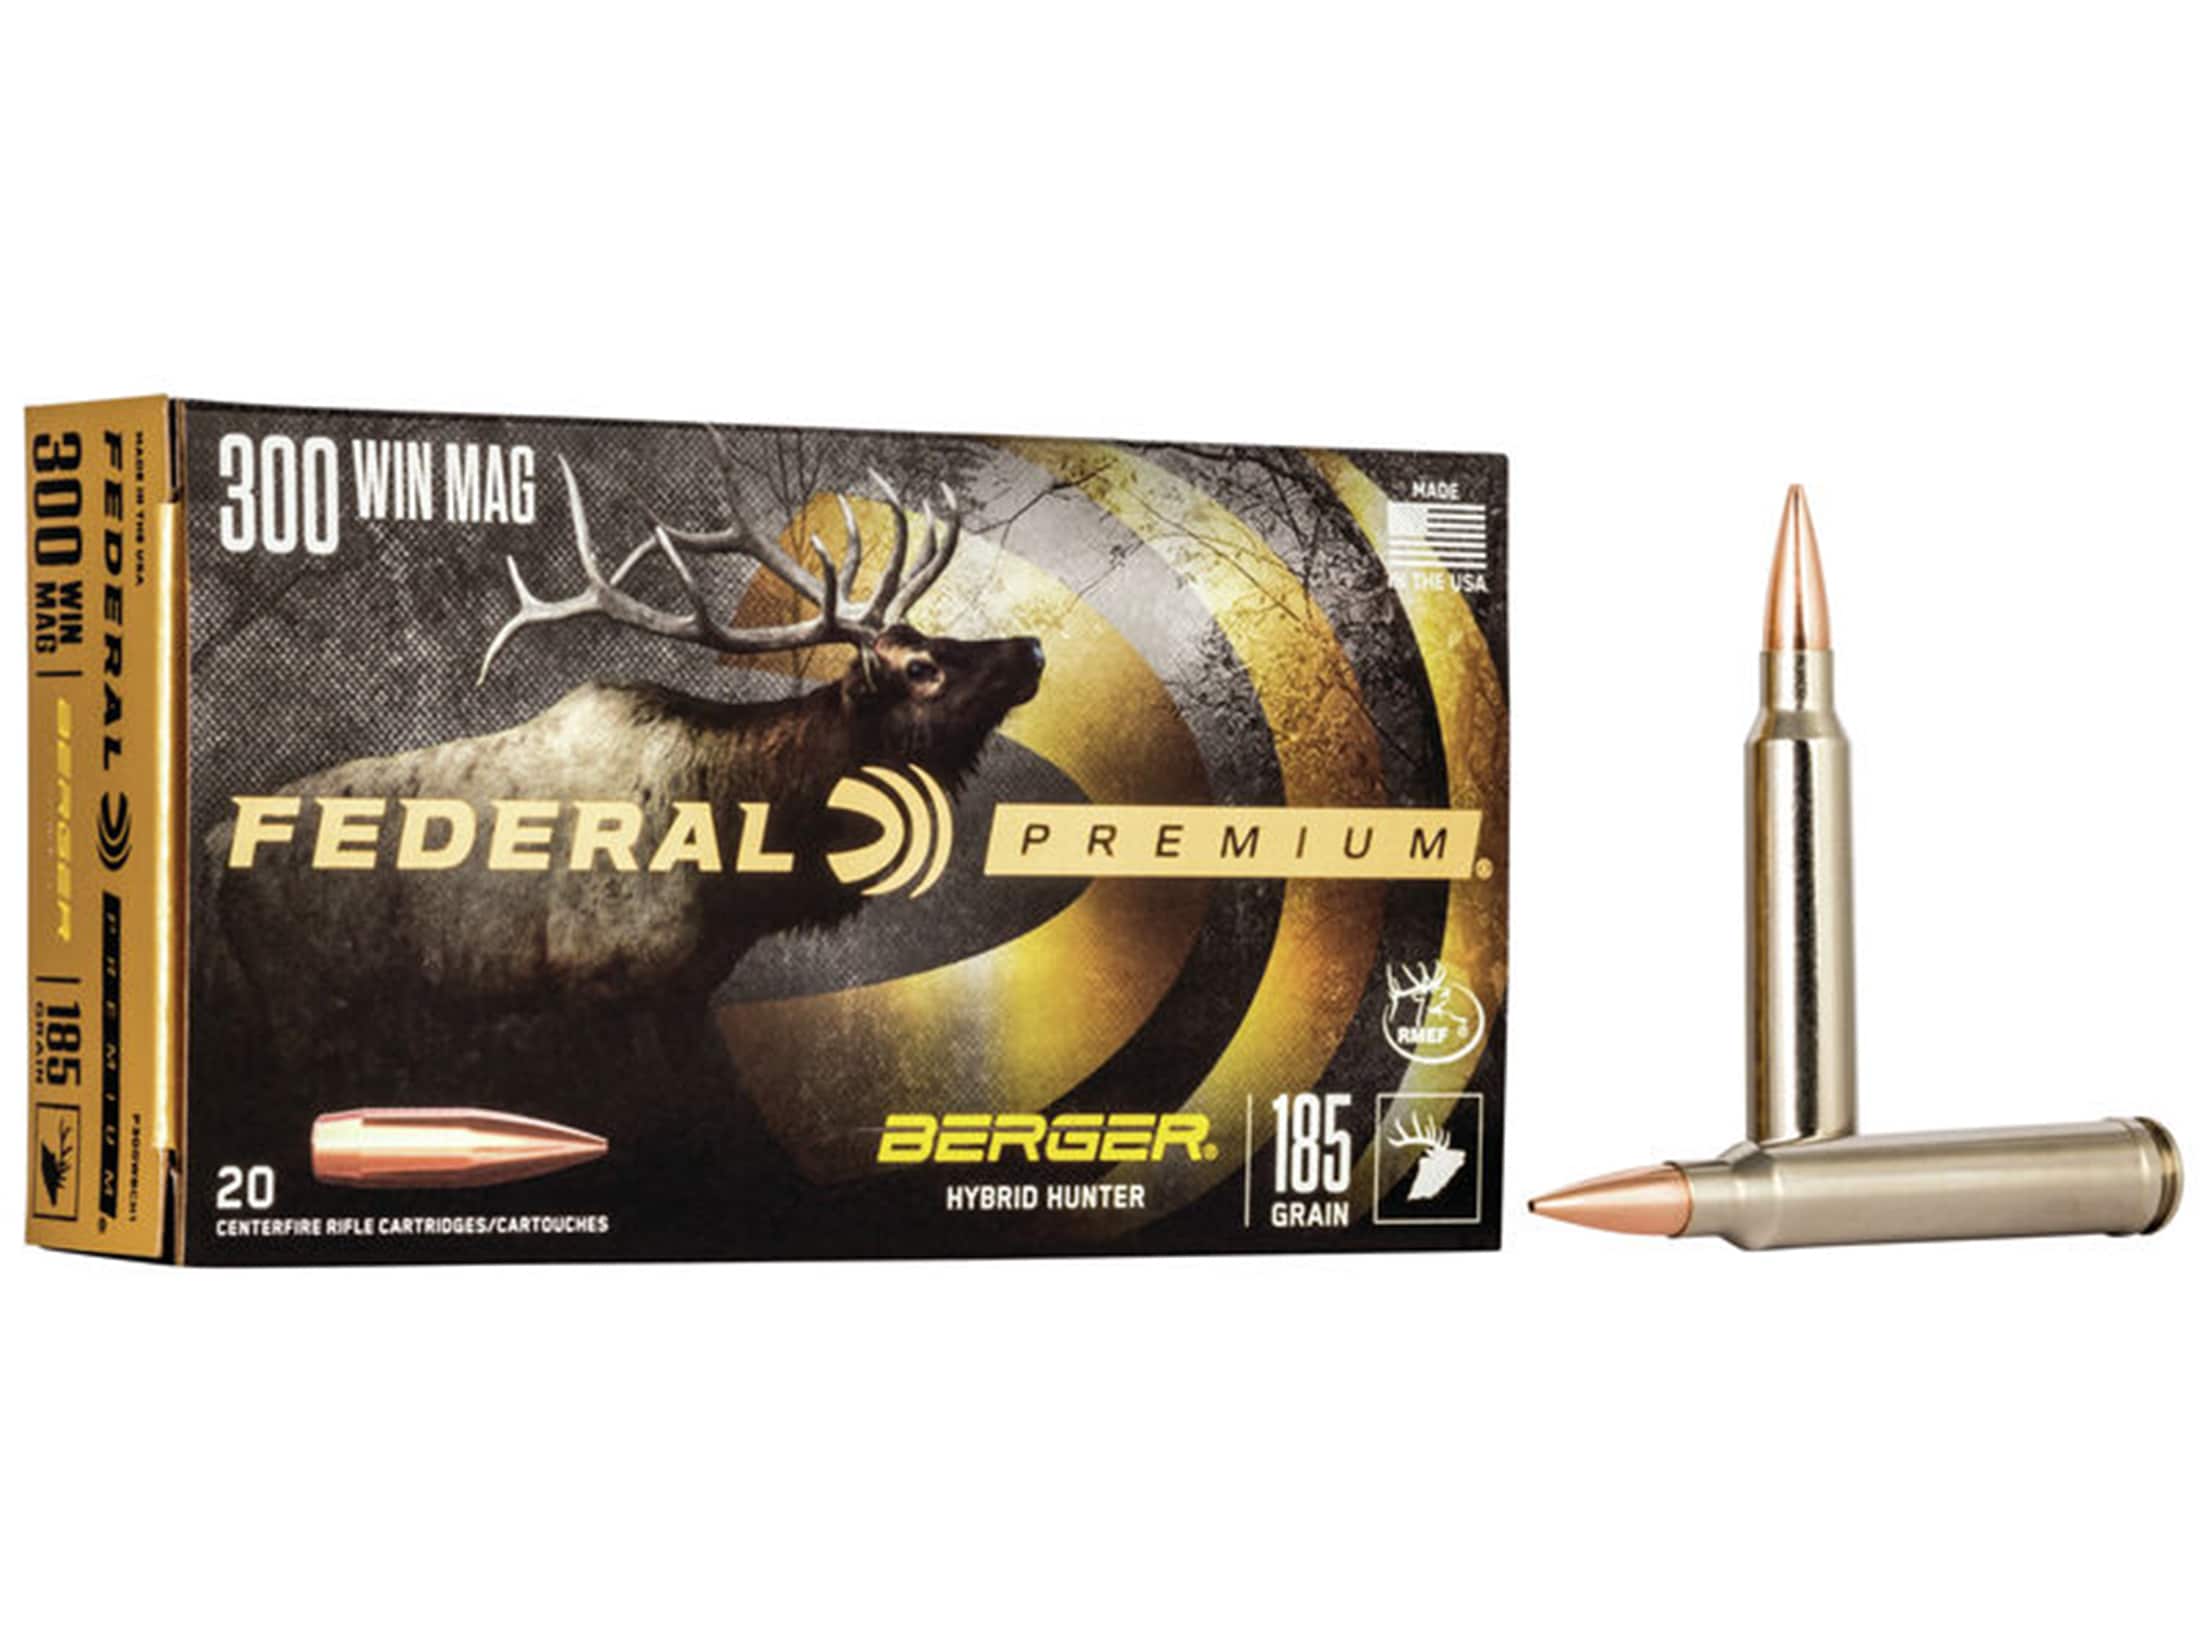 Federal Premium Ammunition 300 Winchester Magnum 185 Grain Berger Hybrid Hunter